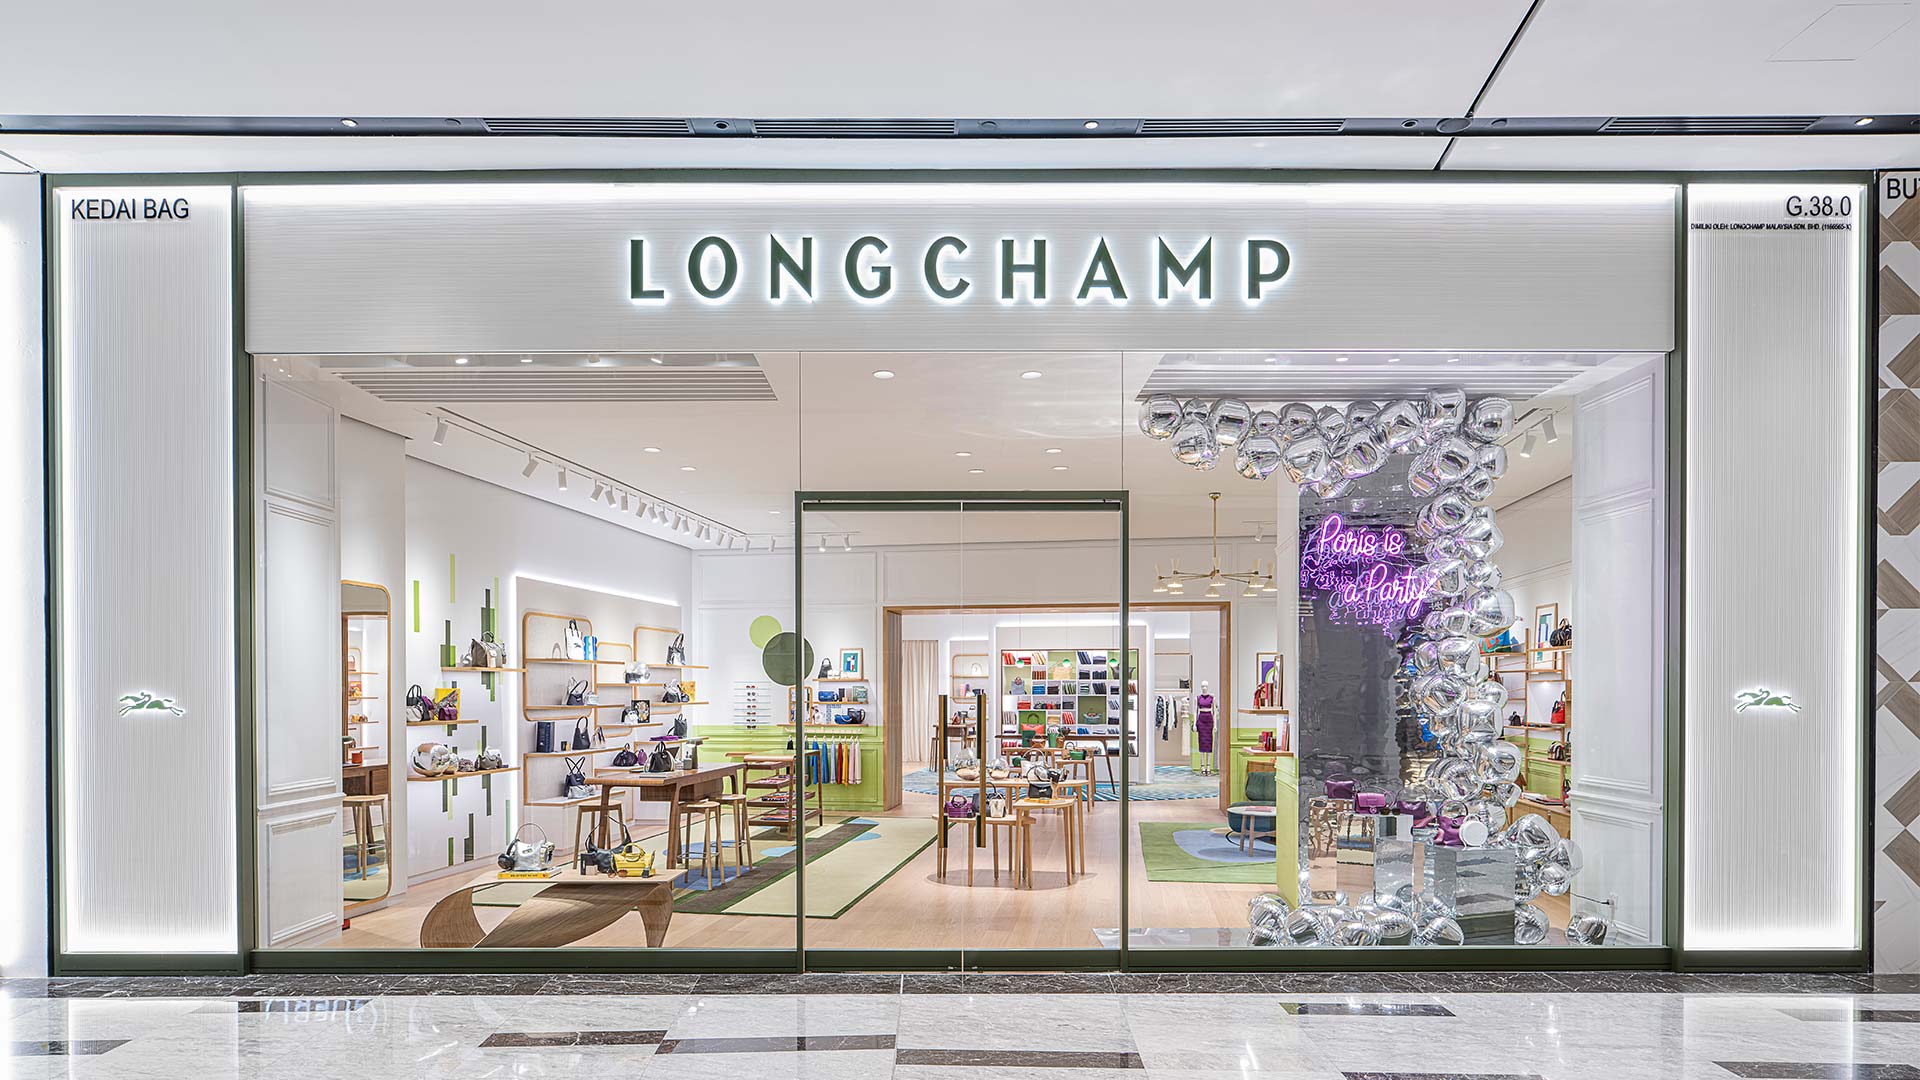 Inside Longchamp’s new flagship boutique in Kuala Lumpur